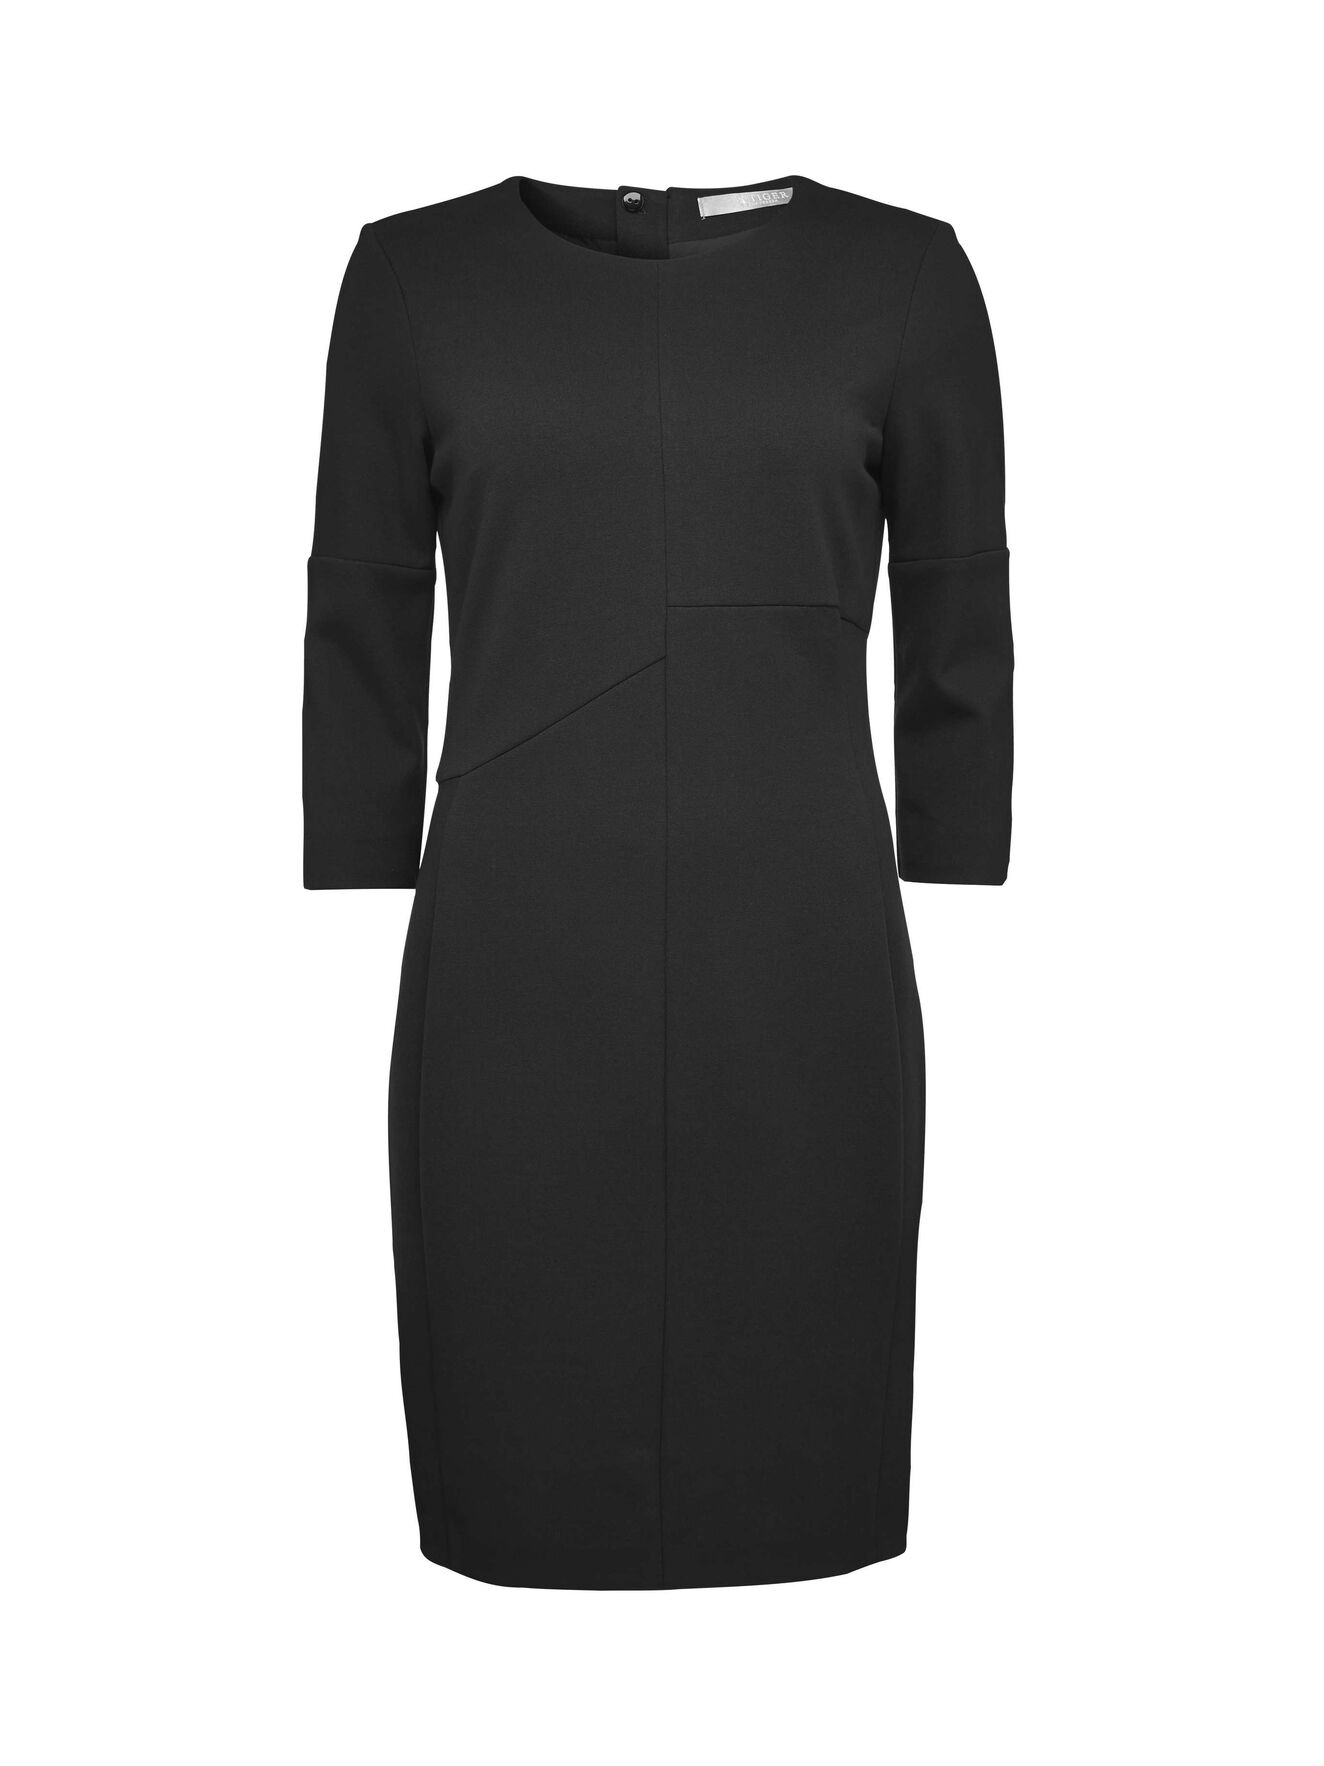 Maee S dress - Köp All Clothing online